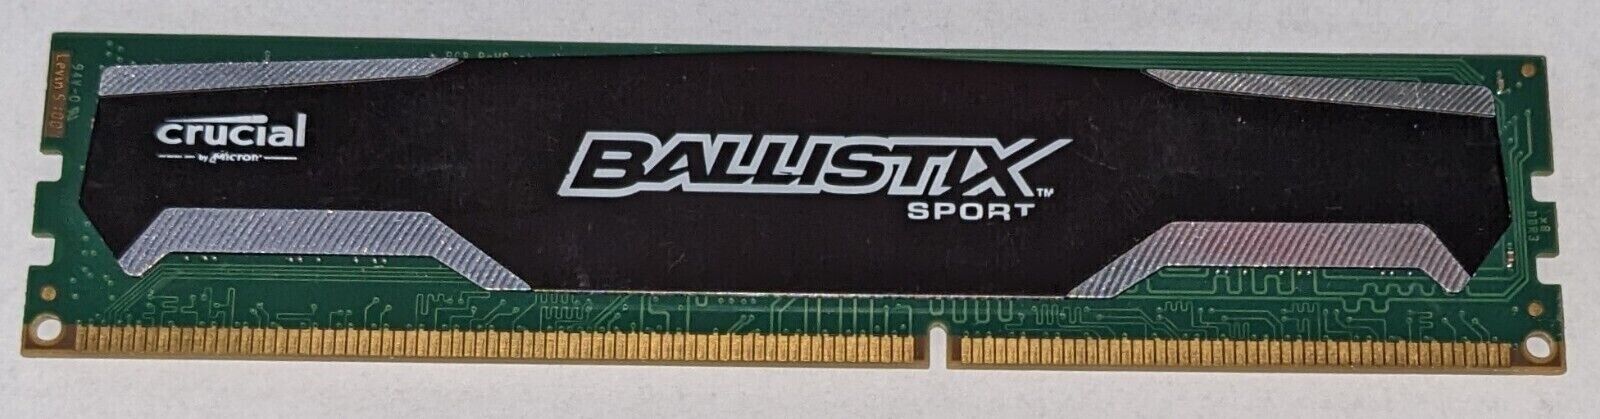 Crucial Ballistix Sport 4GB BLS4G3D1609DS1S00 1600 MHz Gaming Memory RAM